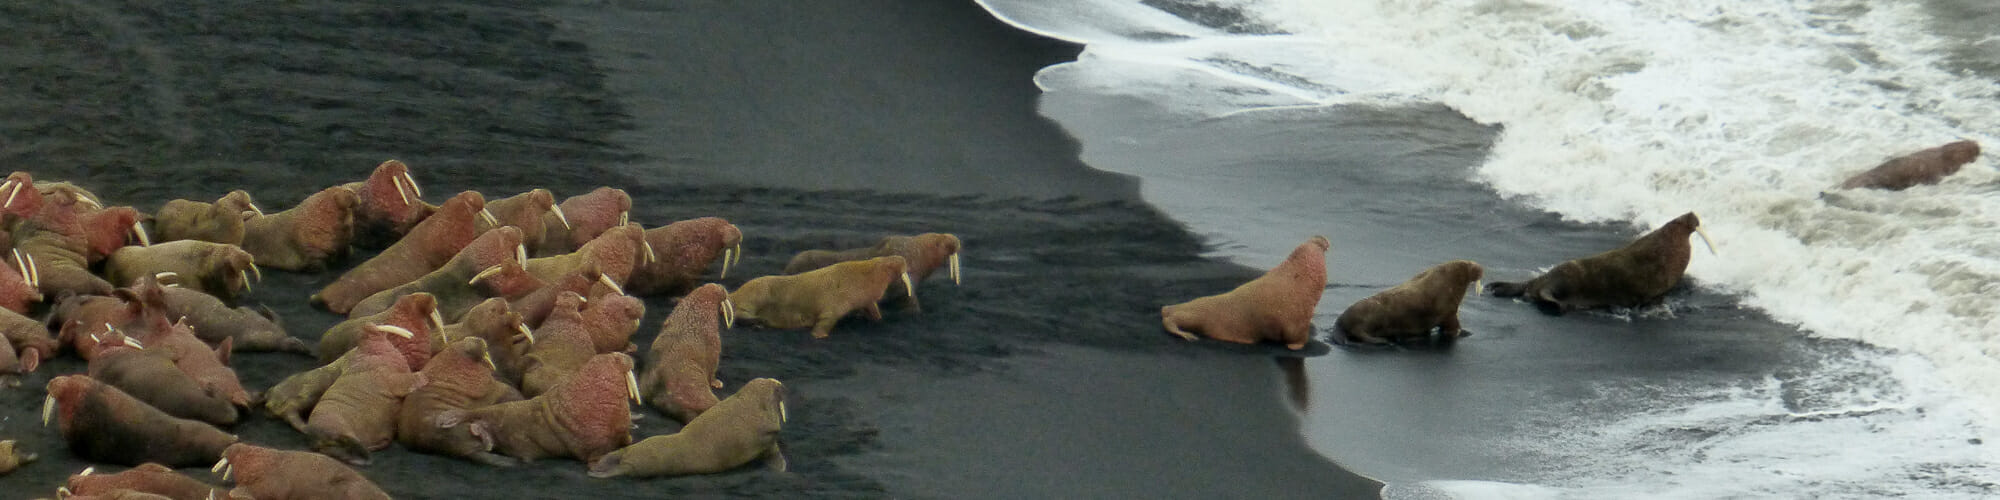 walrus enter the bering sea